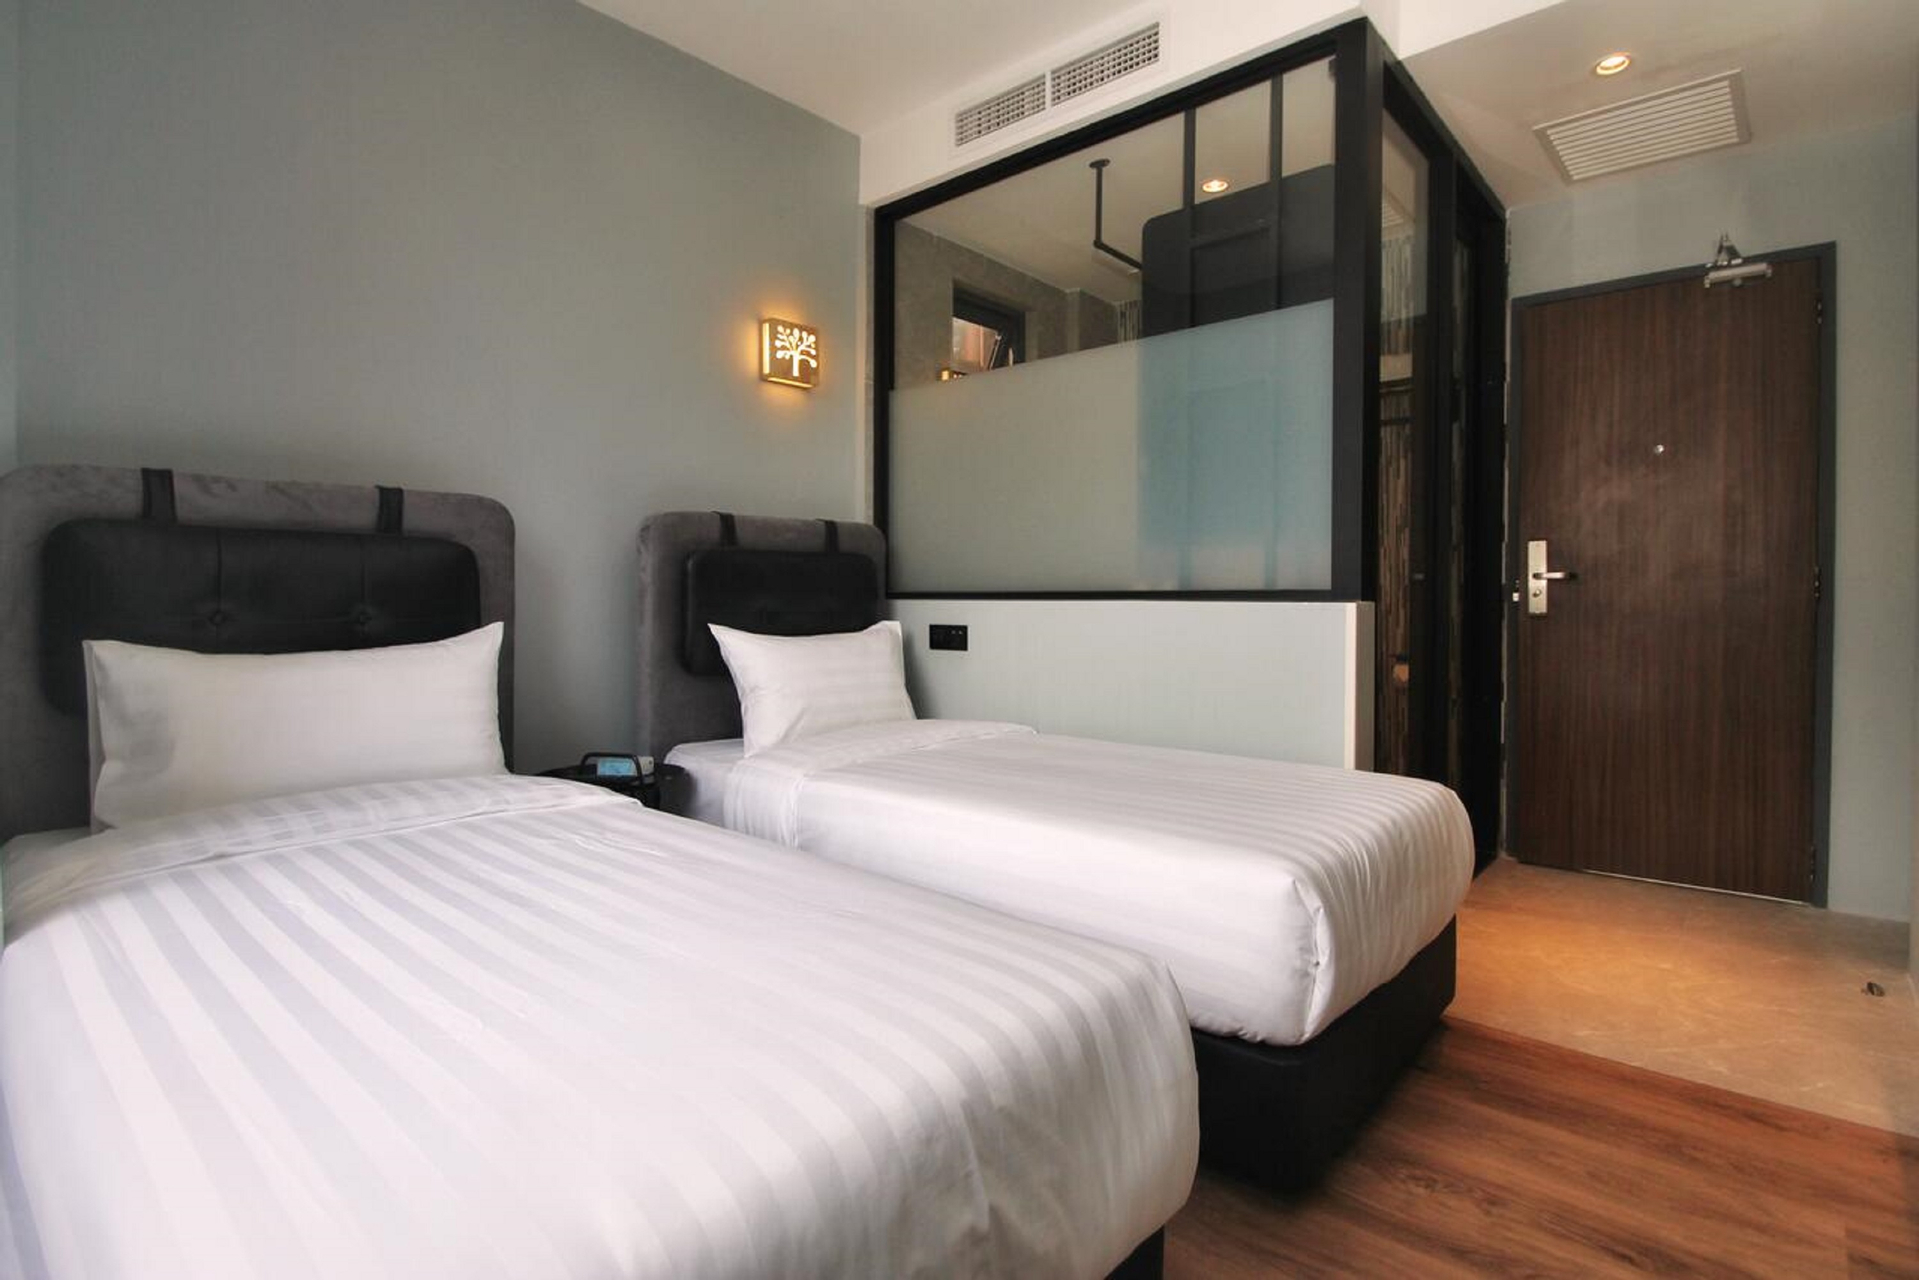 Bedroom 3, The Seraya Hotel, Kota Kinabalu